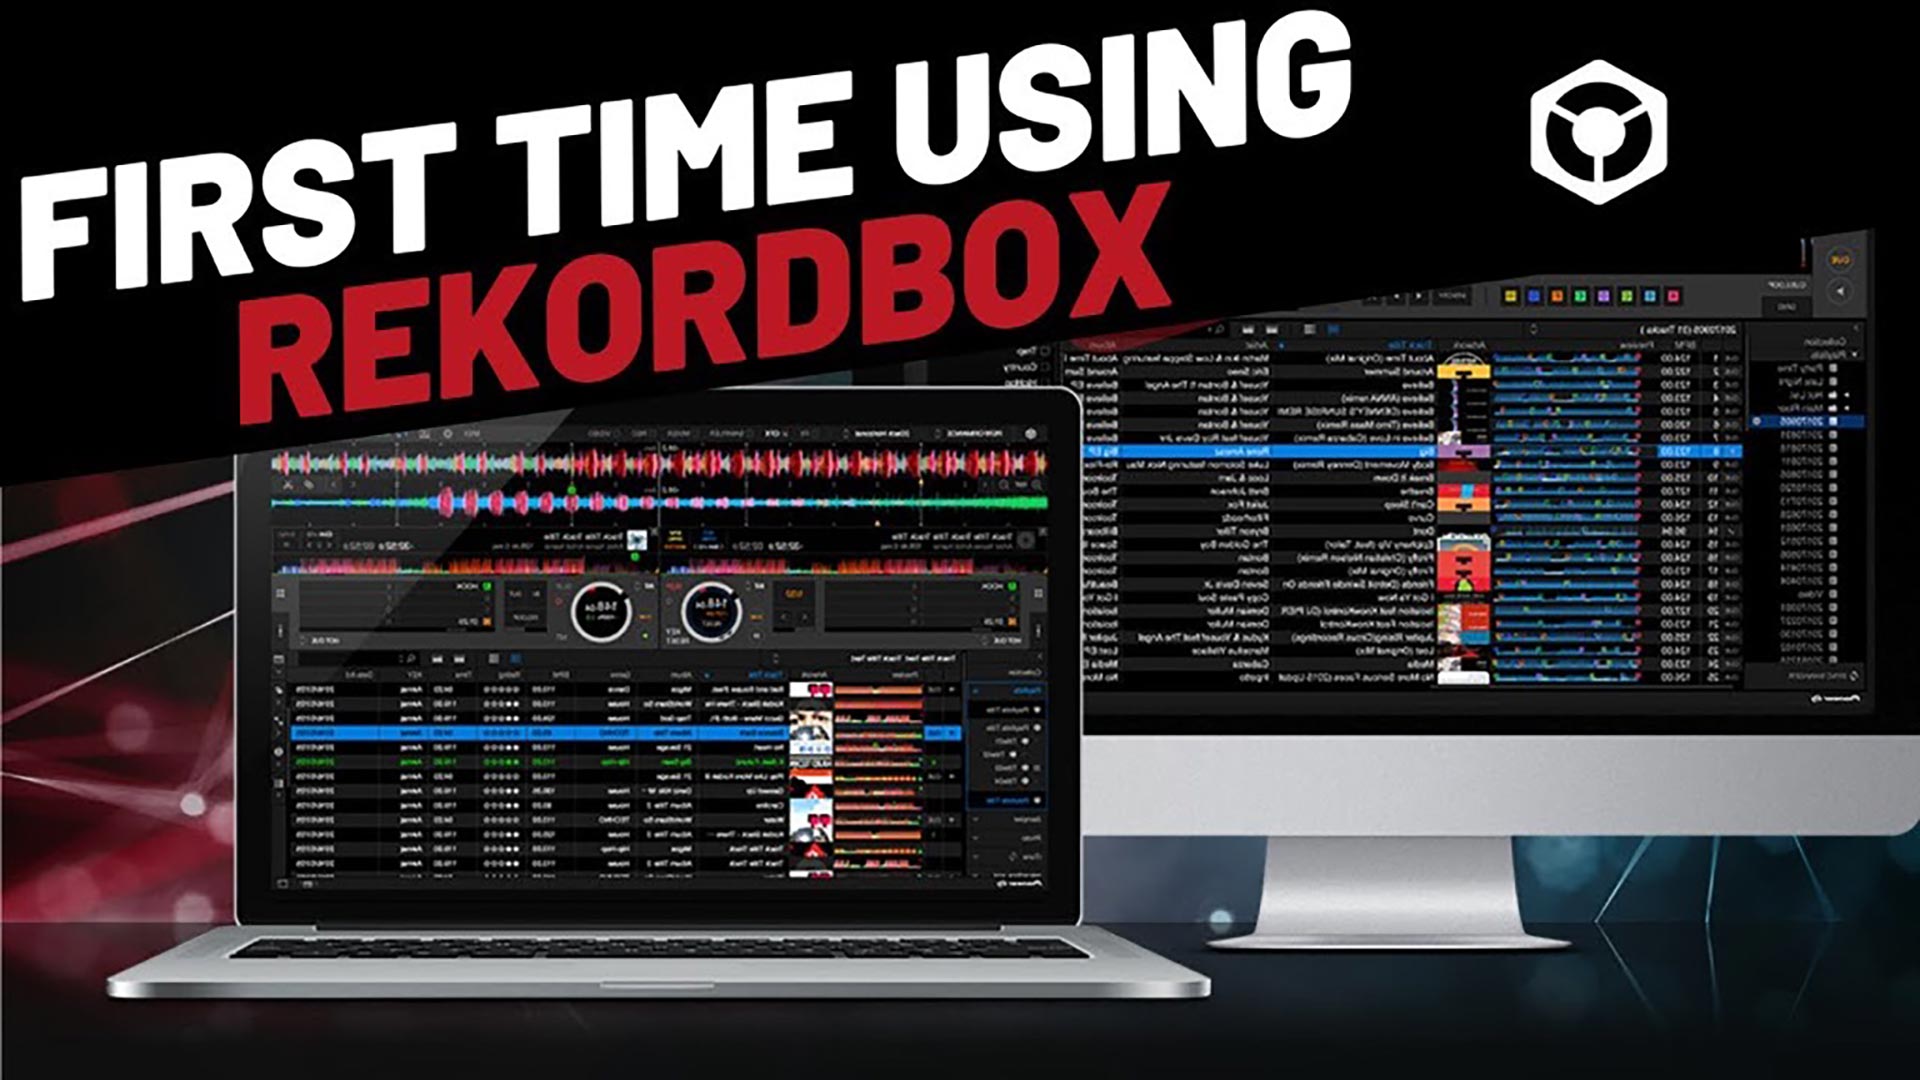 How to use Rekordbox - Rekordbox Walkthrough